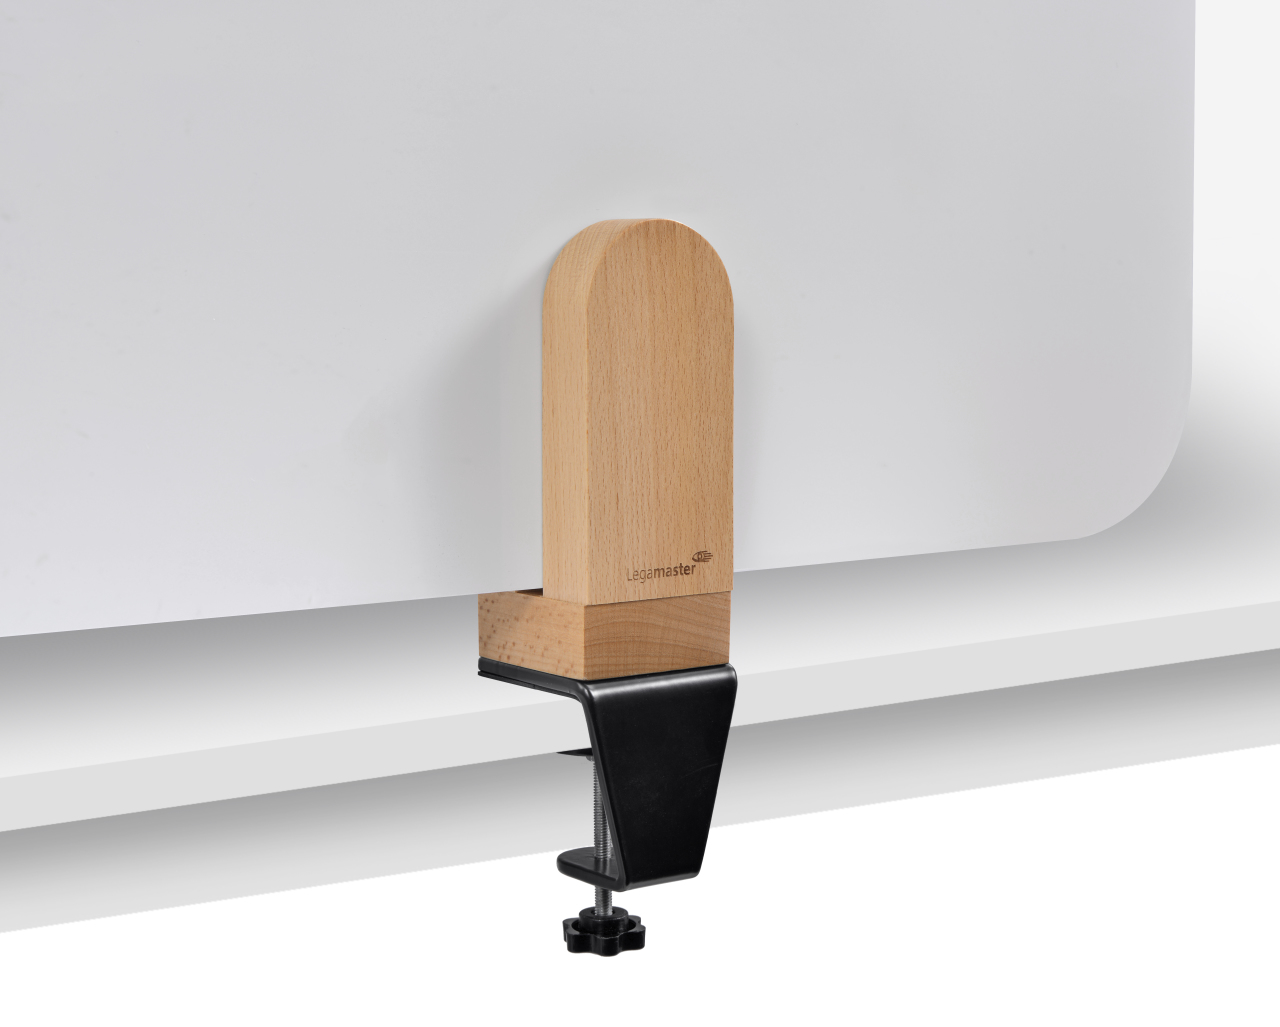 Legamaster ELEMENTS whiteboard desk divider 60x80cm avec pieds en bois